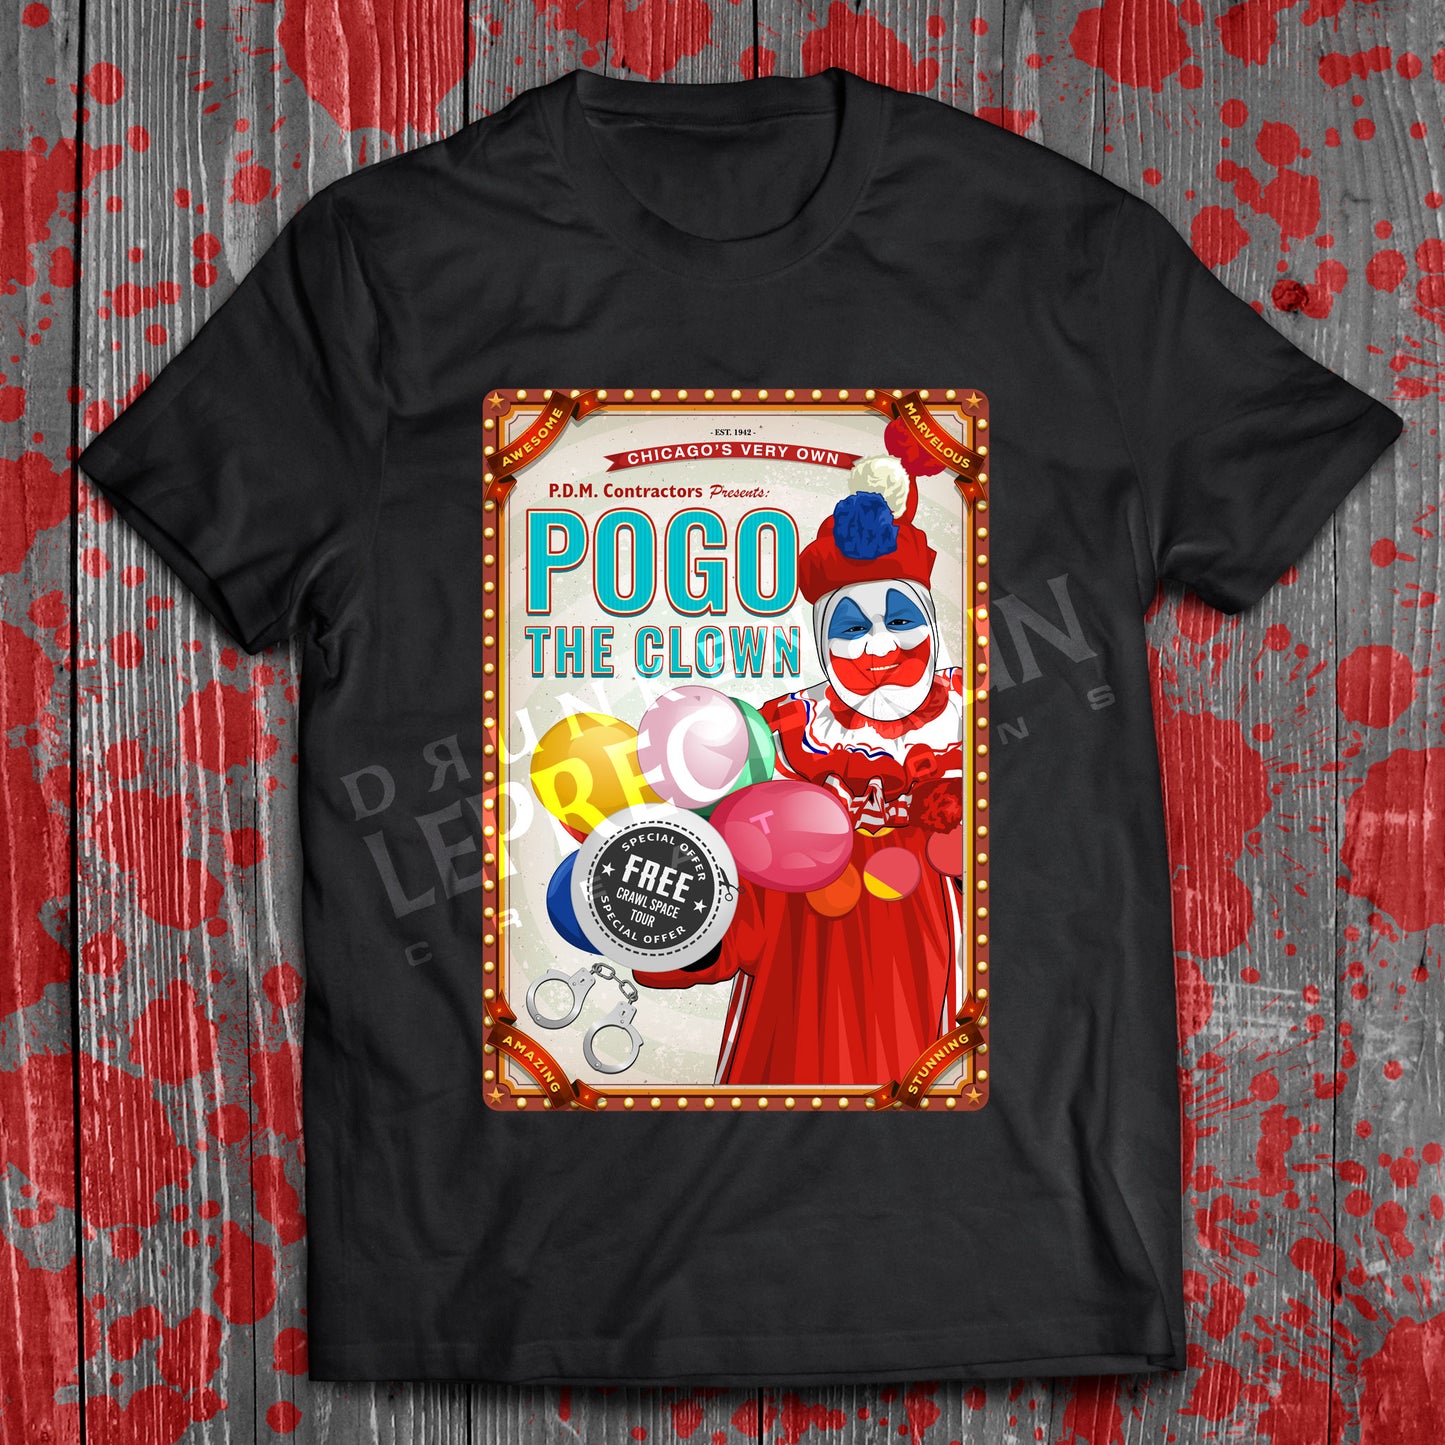 John Wayne Gacy - Pogo the Clown